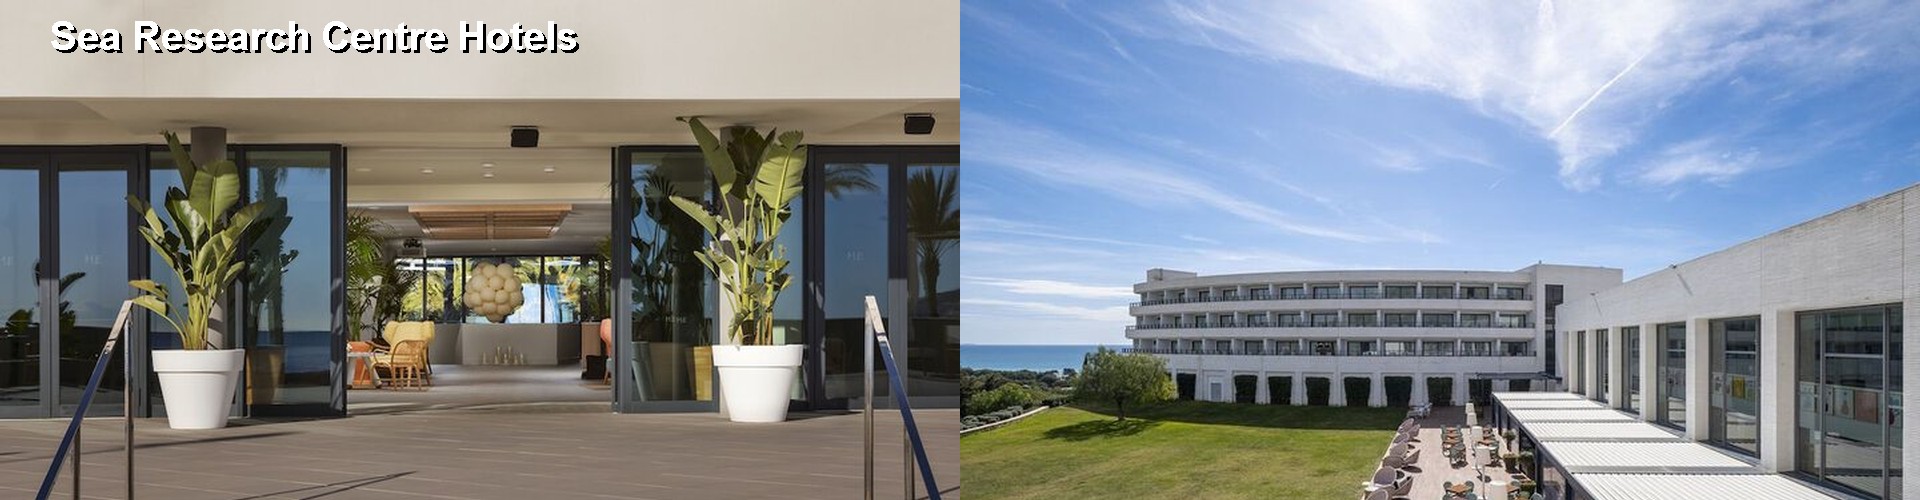 5 Best Hotels near Sea Research Centre